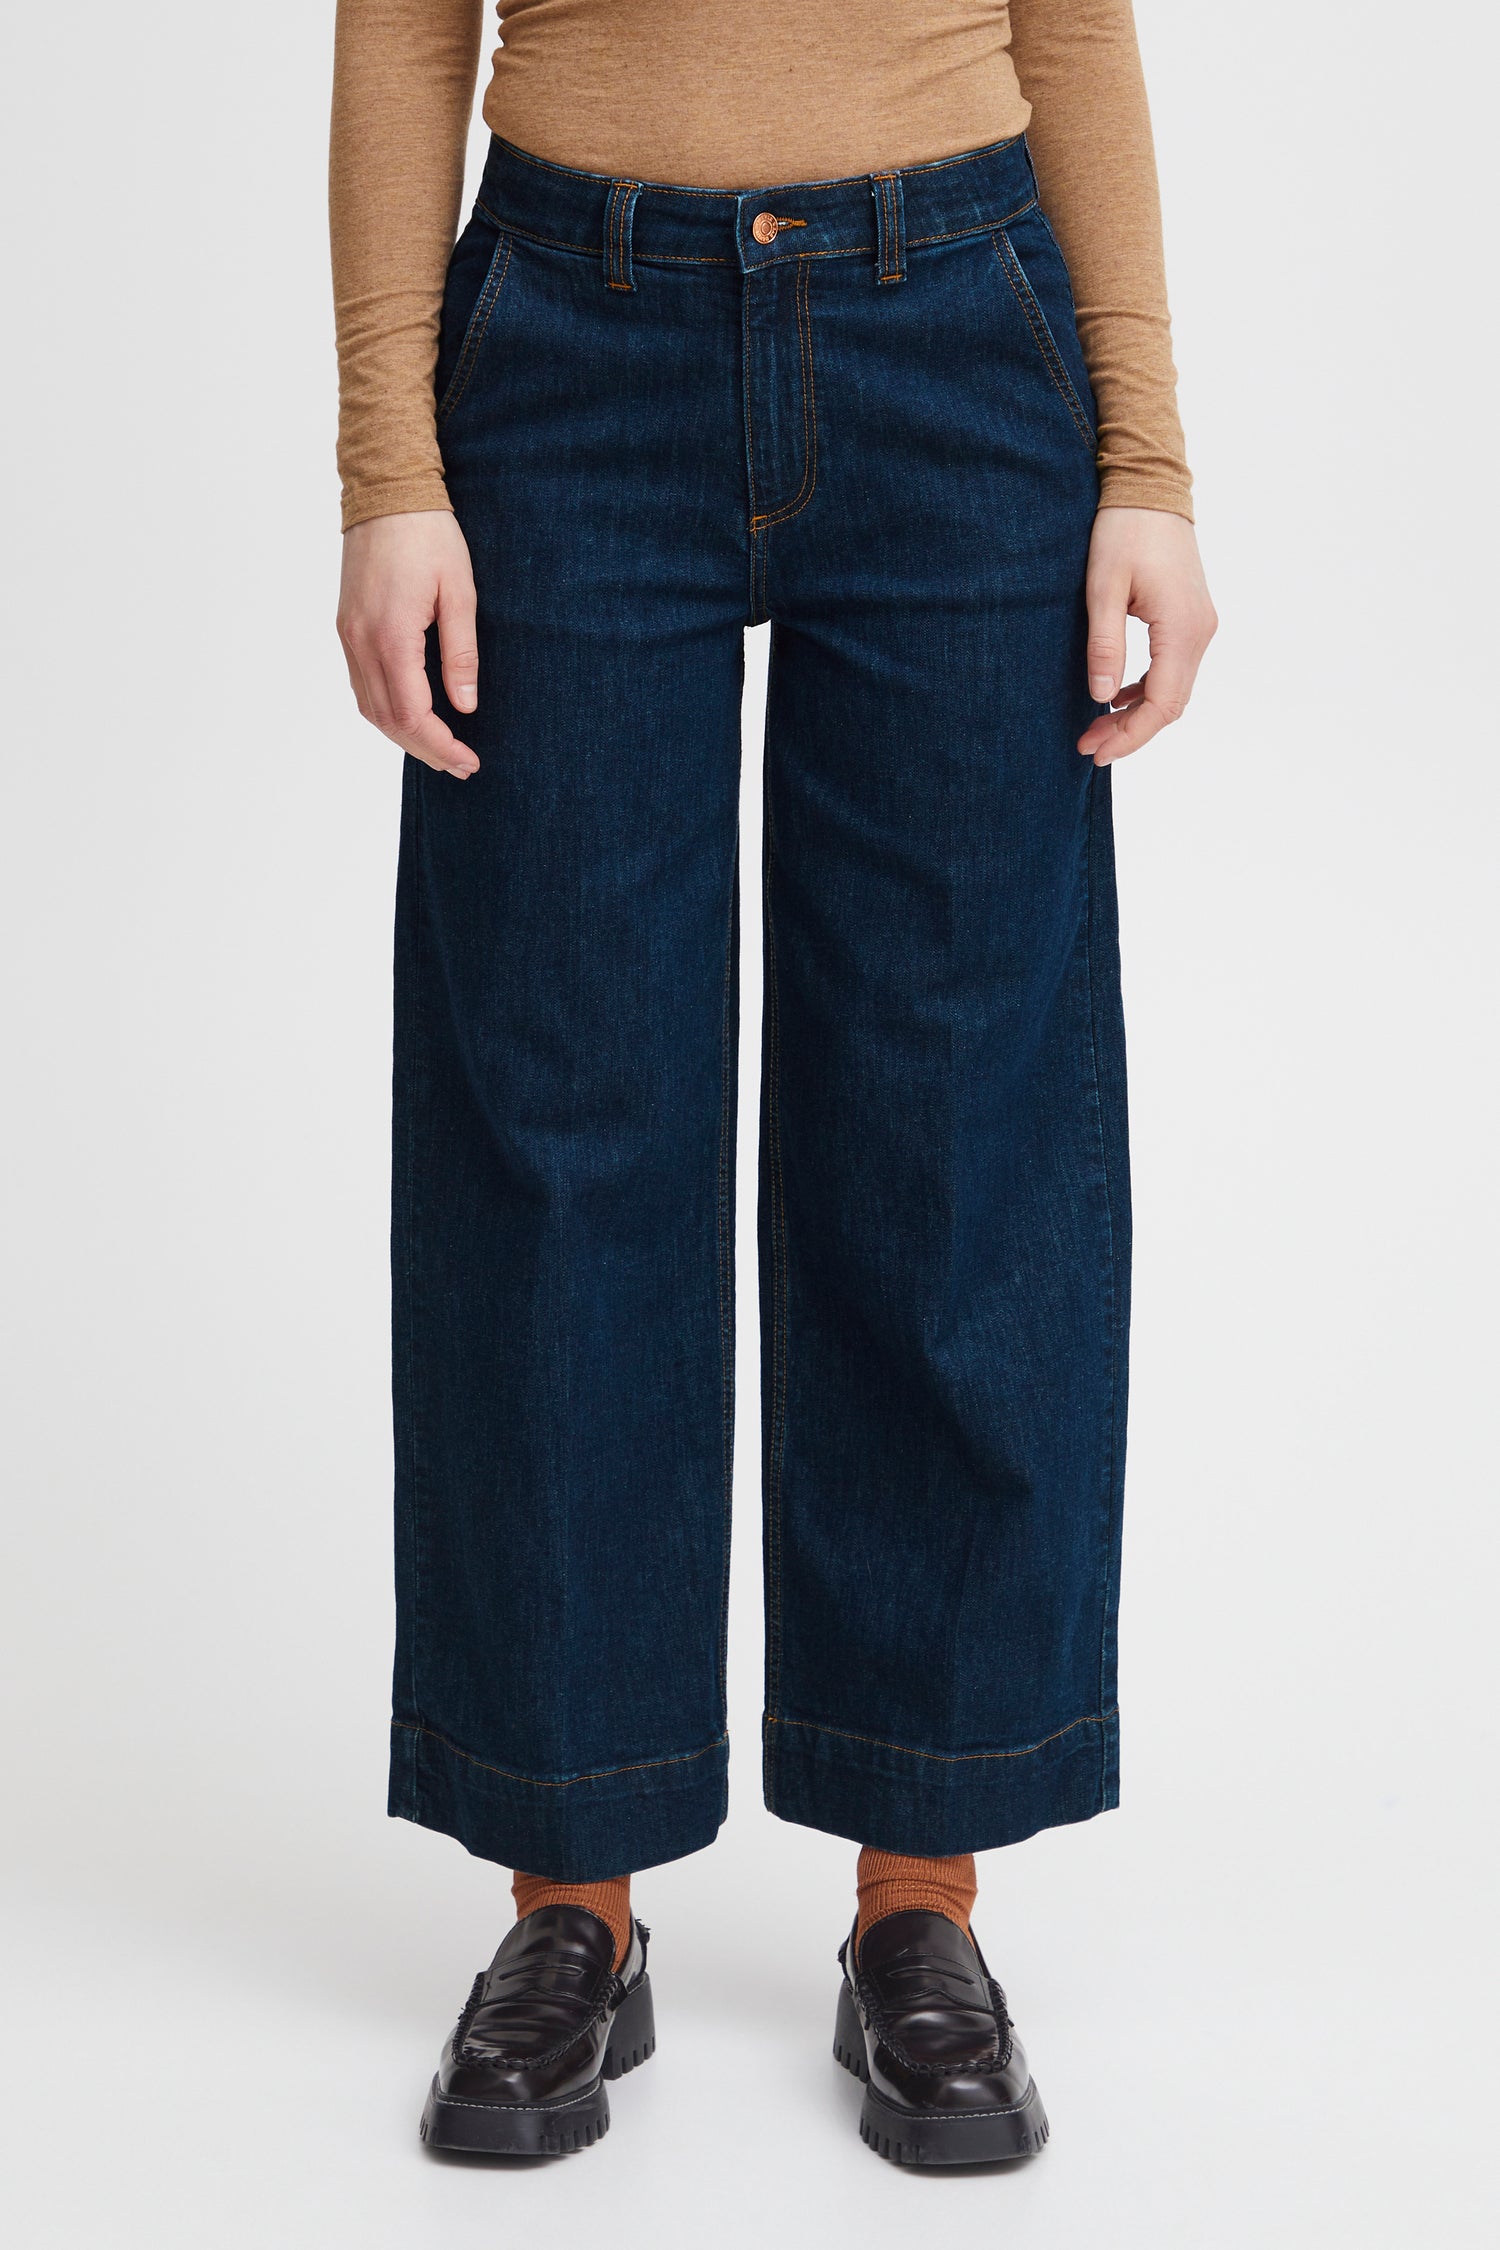 Kato Komma Cropped Jeans